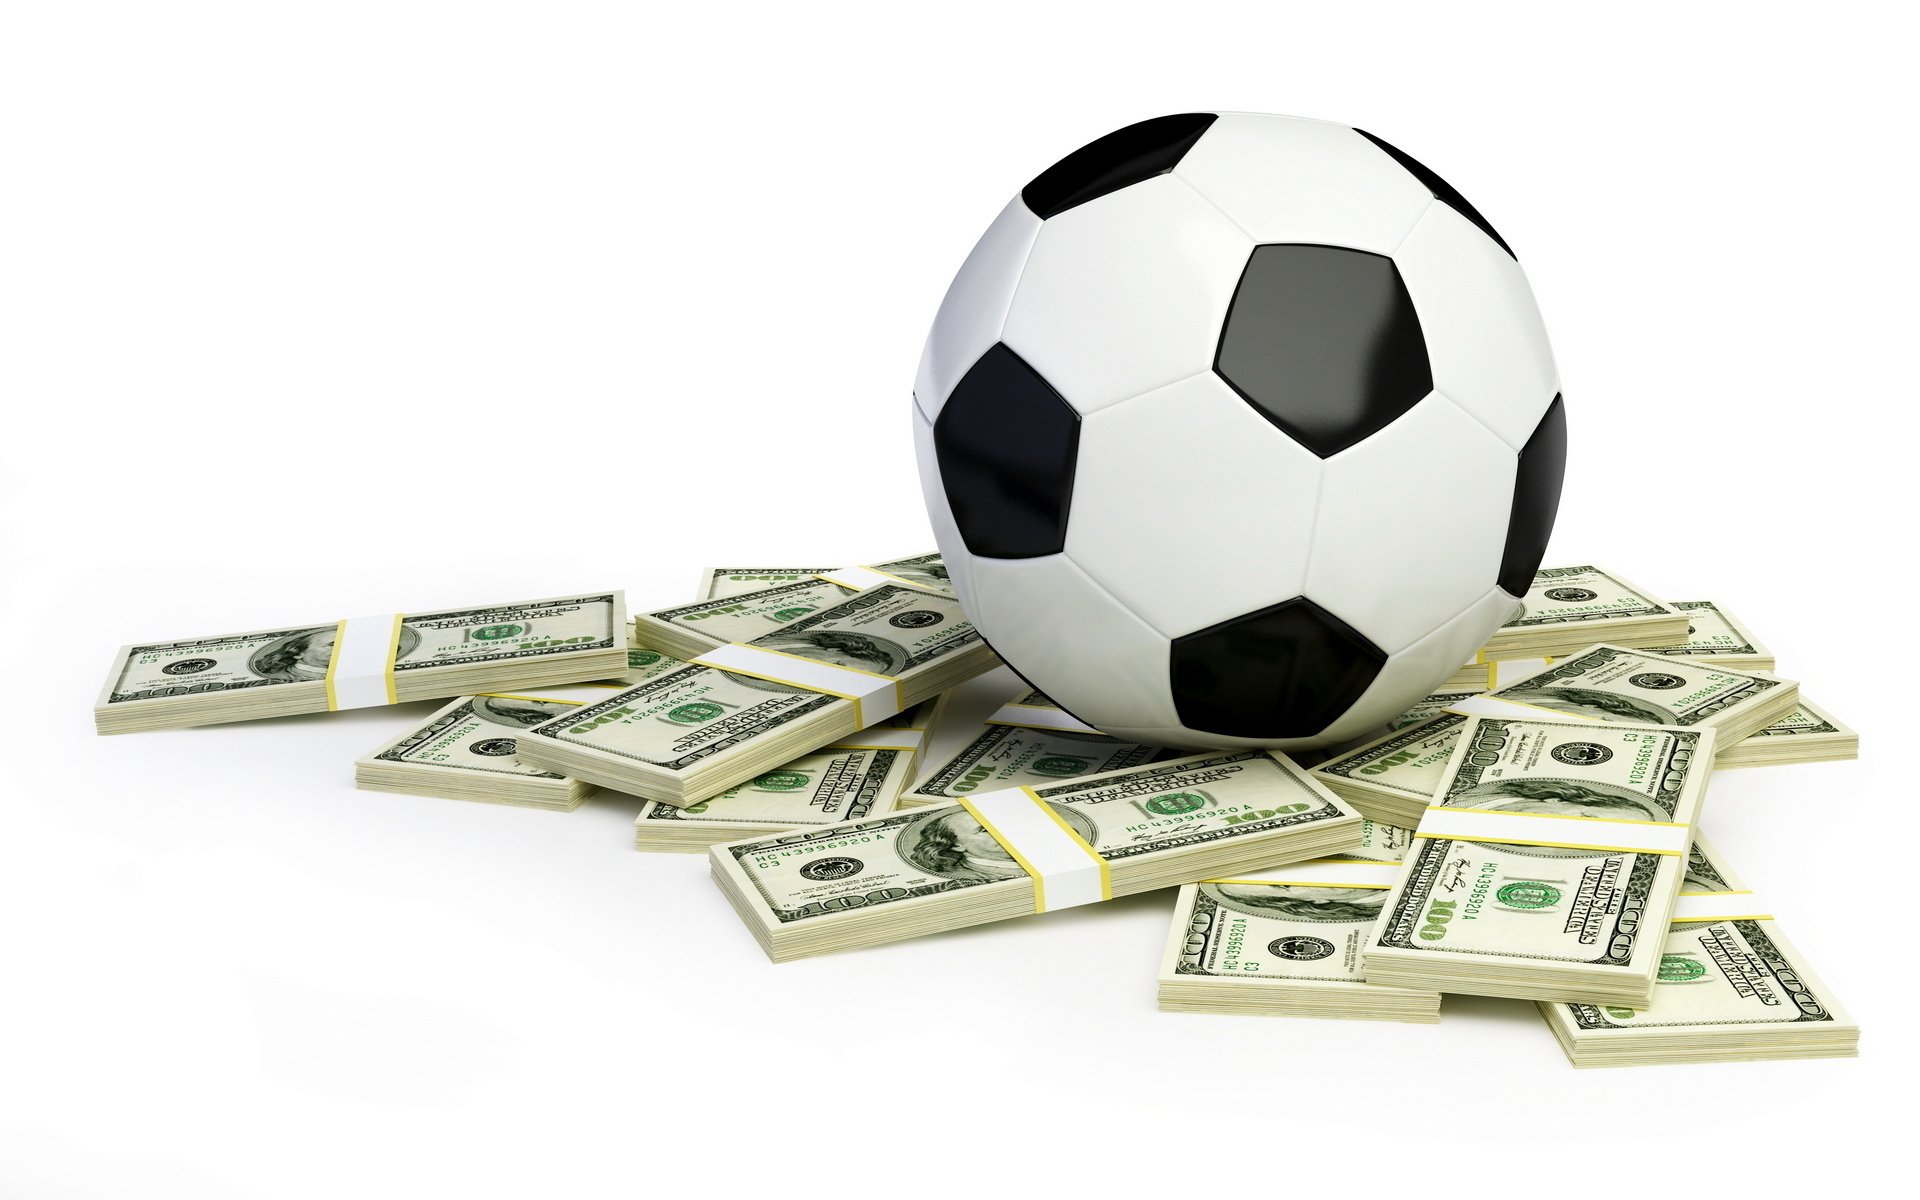 доллары баксы пачки деньги мяч футбол